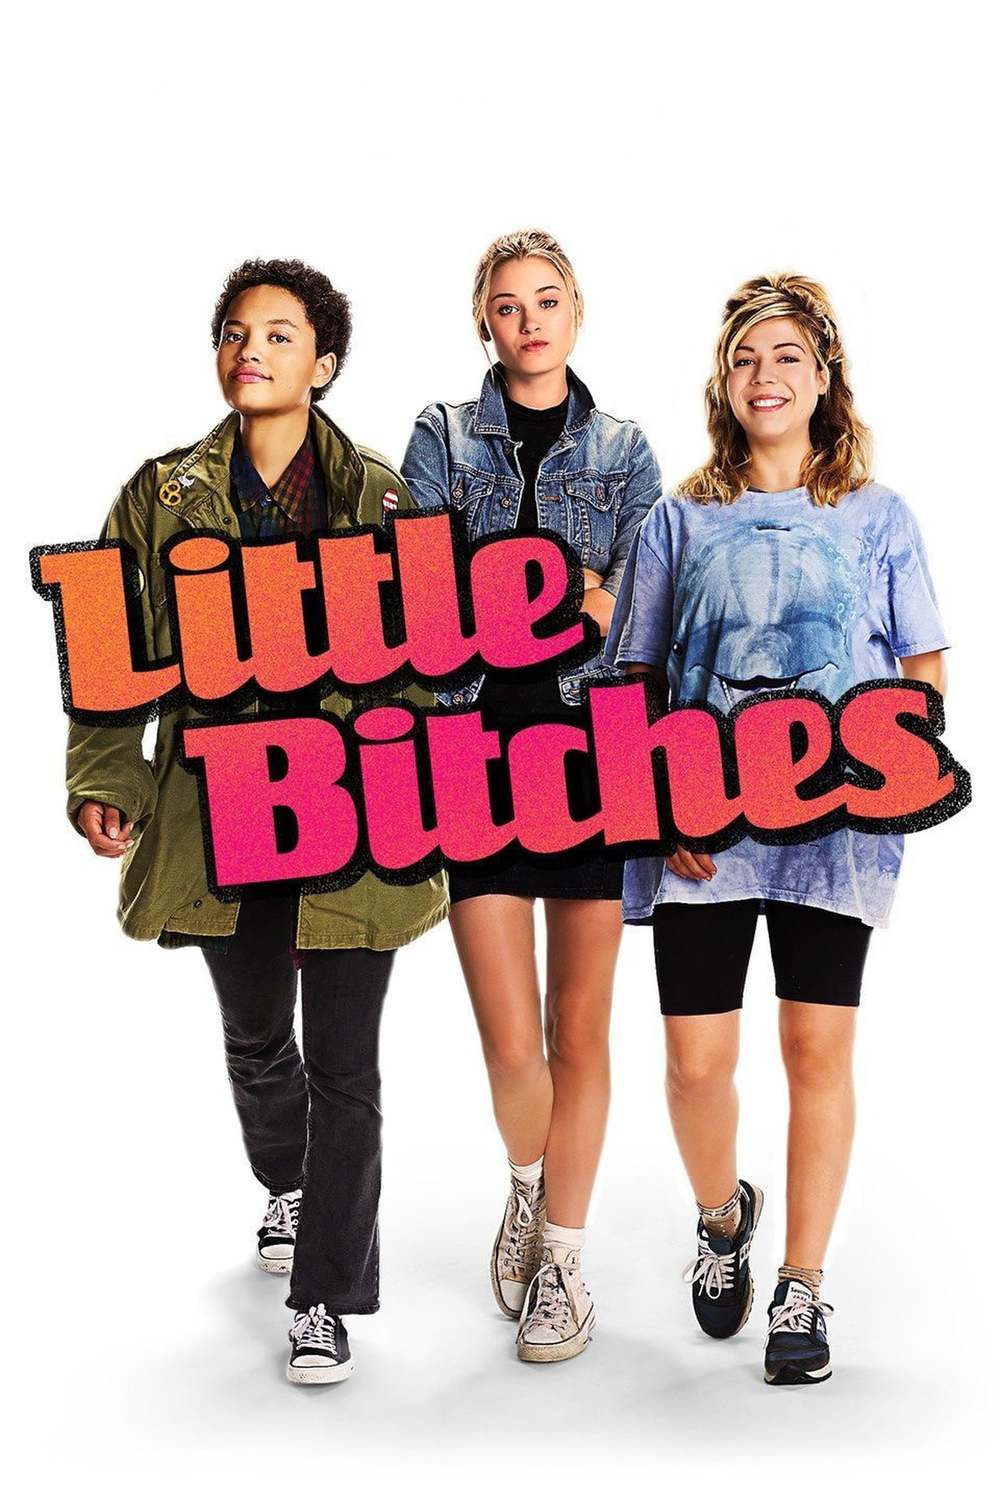 Little Bitches | Fandíme filmu